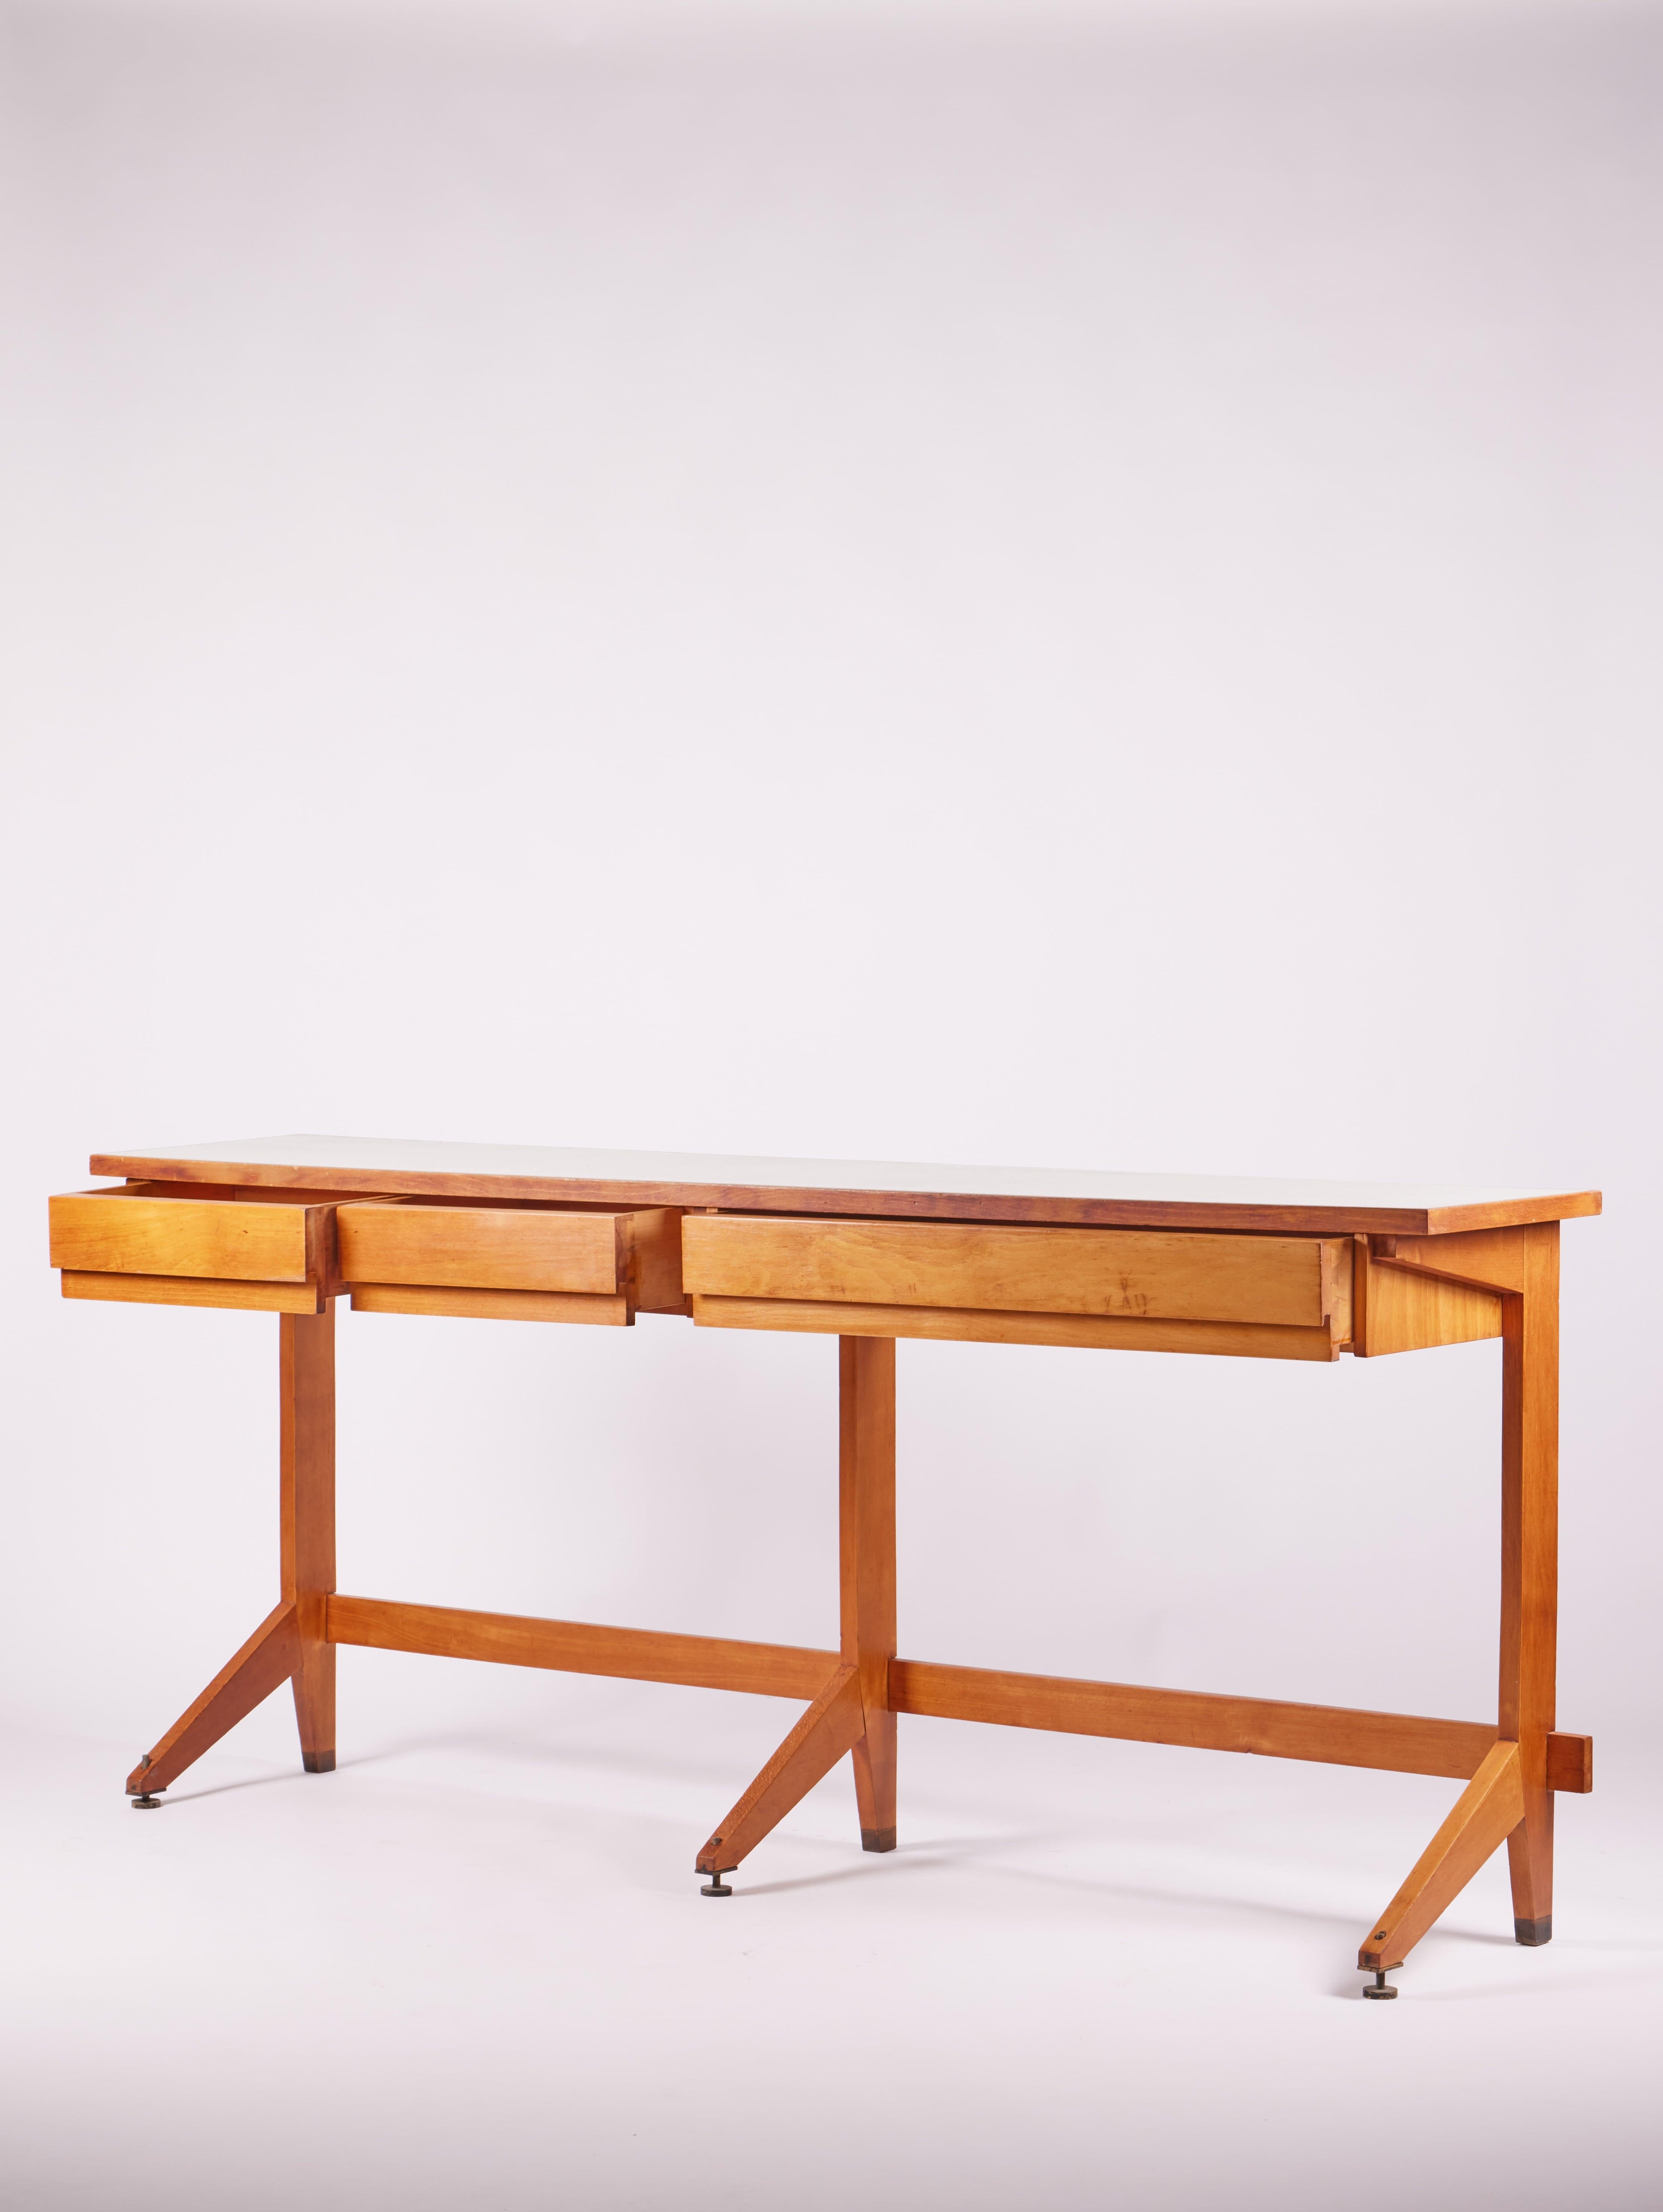 Wood Ico Parisi, Italian Midcentury Long Sideboard in Walnut, circa 1950 For Sale